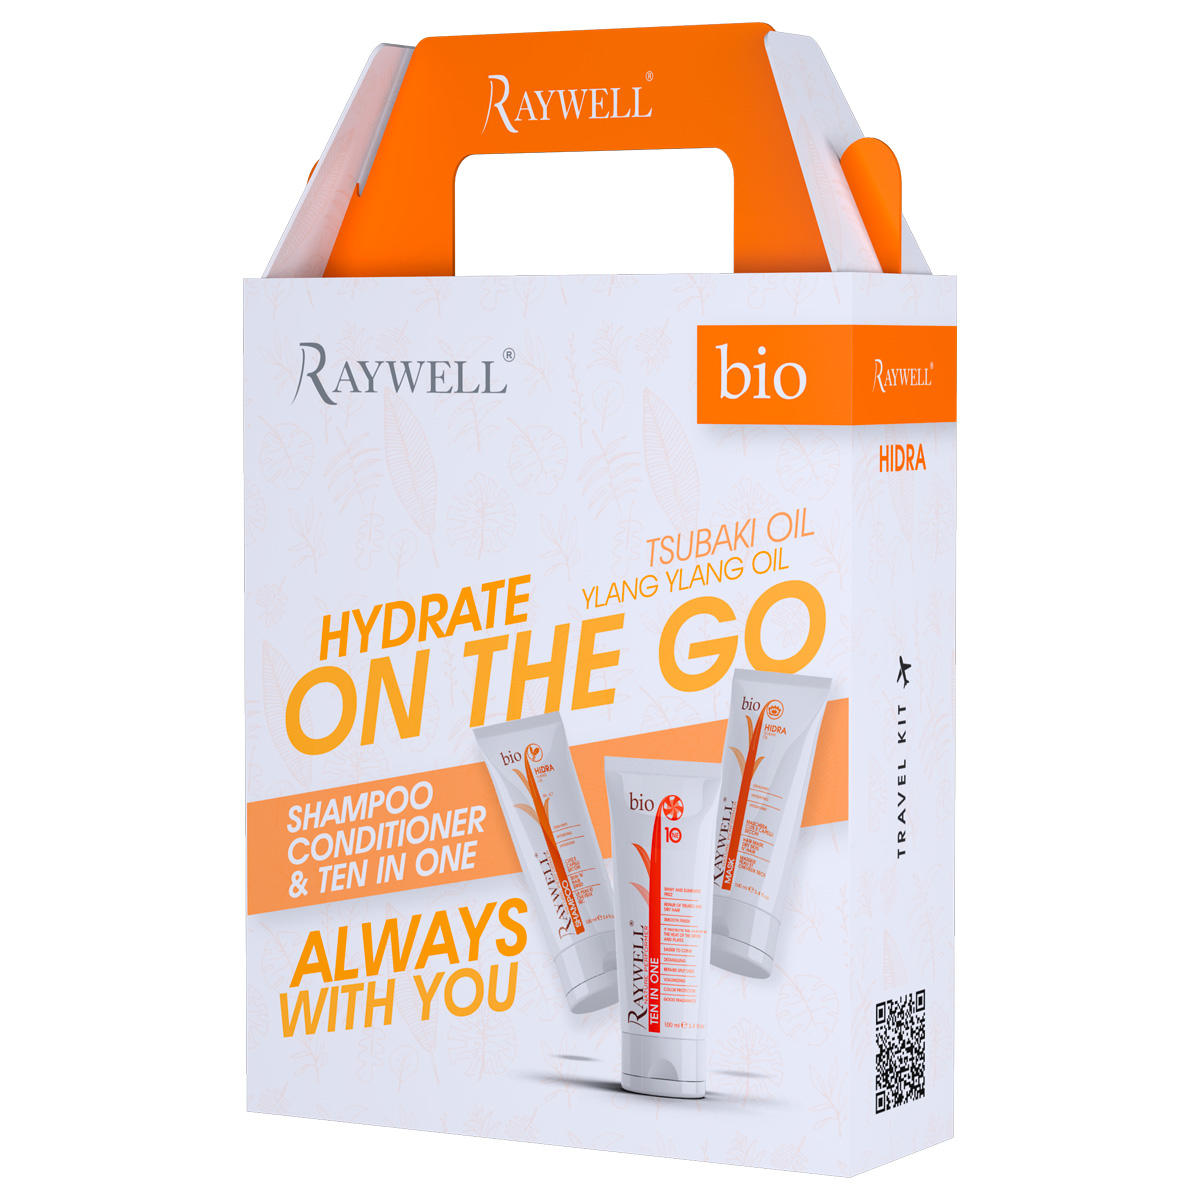 Raywell Bio HIDRA Travel Kit Hydrate on the Go